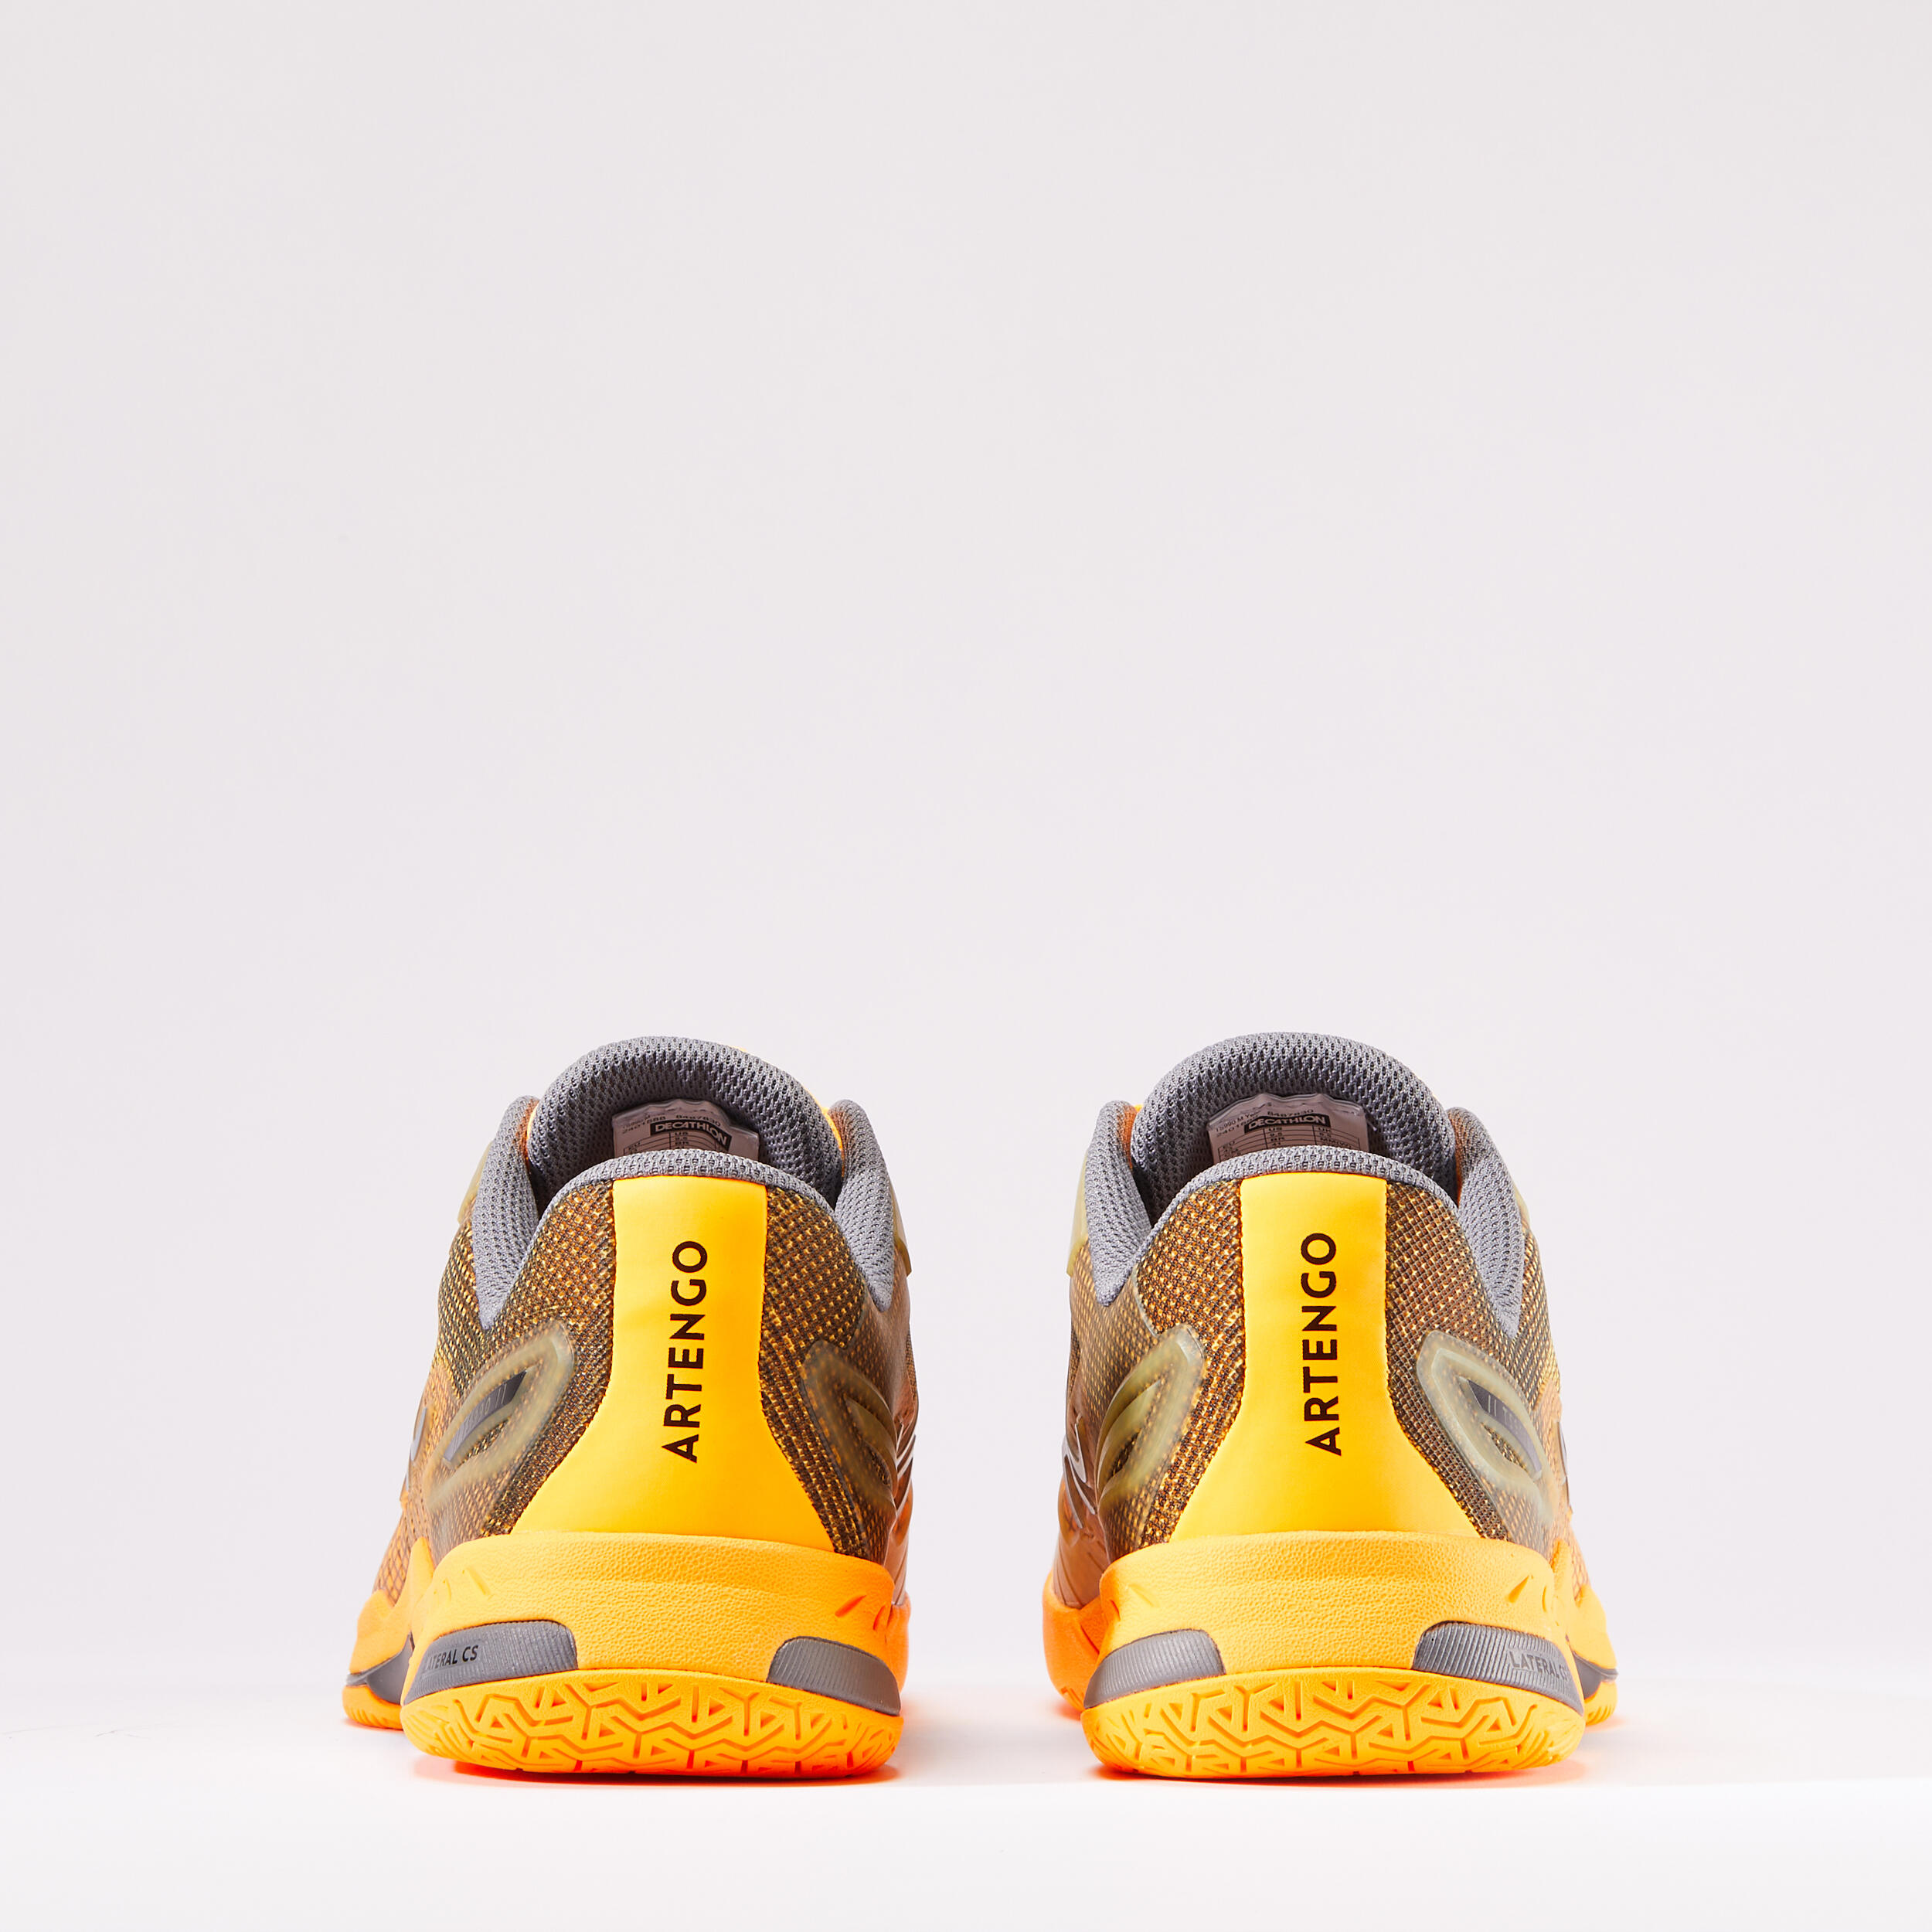 Men's Multi-Court Tennis Shoes TS990 - Yellow 6/8